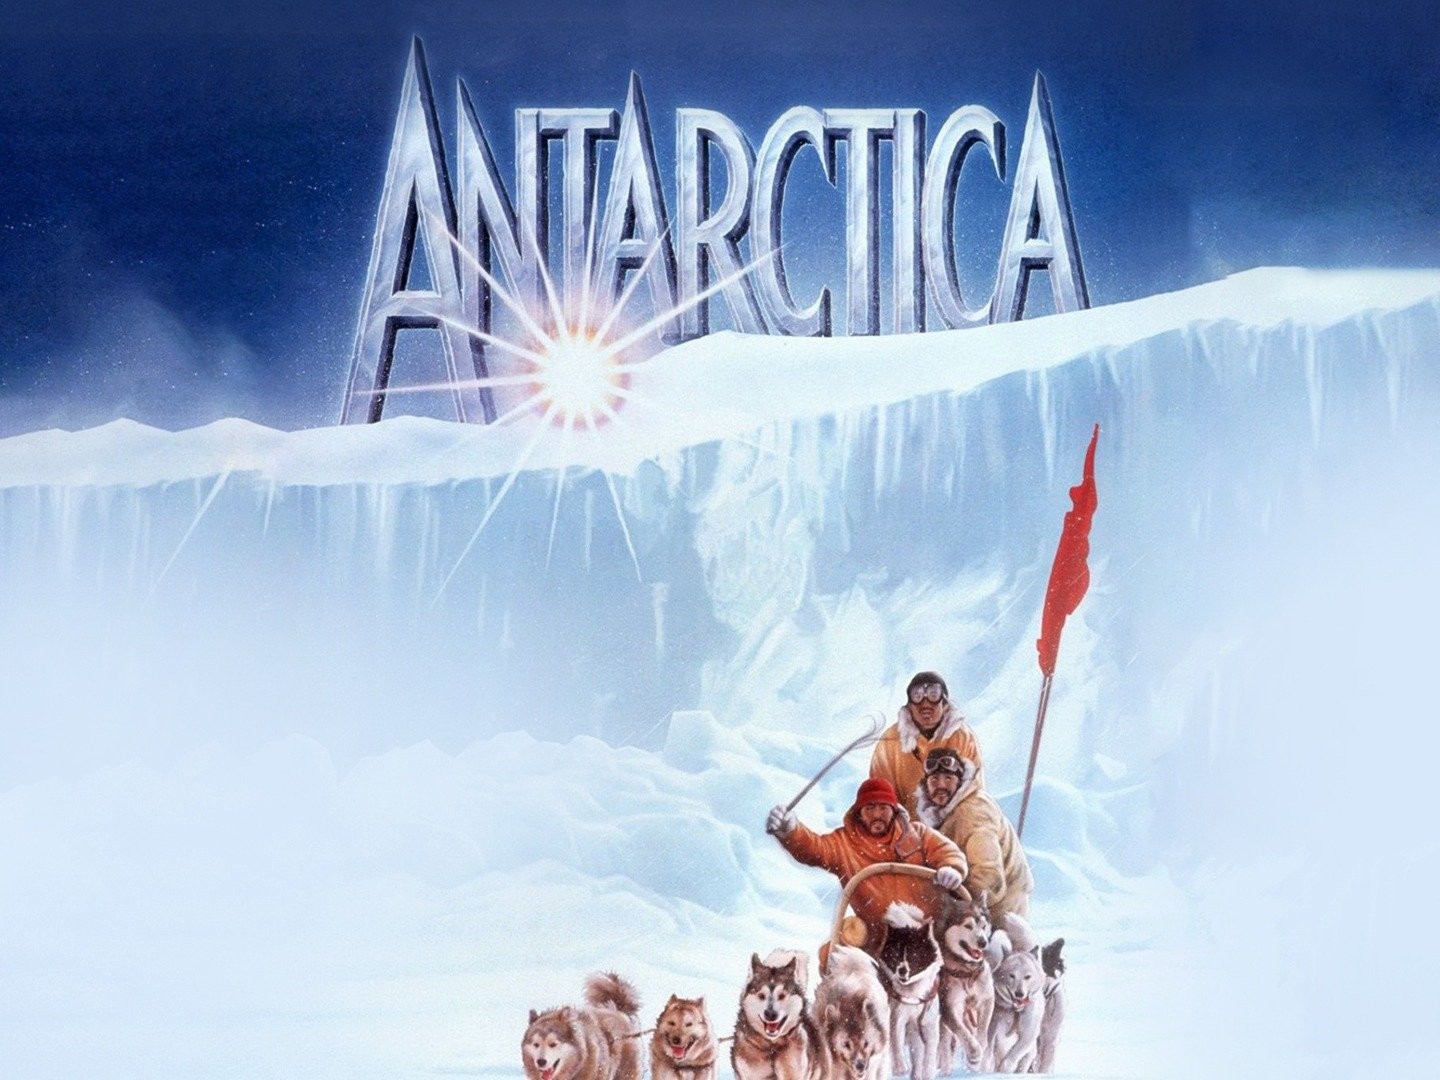 Imagine Anime - Anyone wanna go Antarctica with me? If